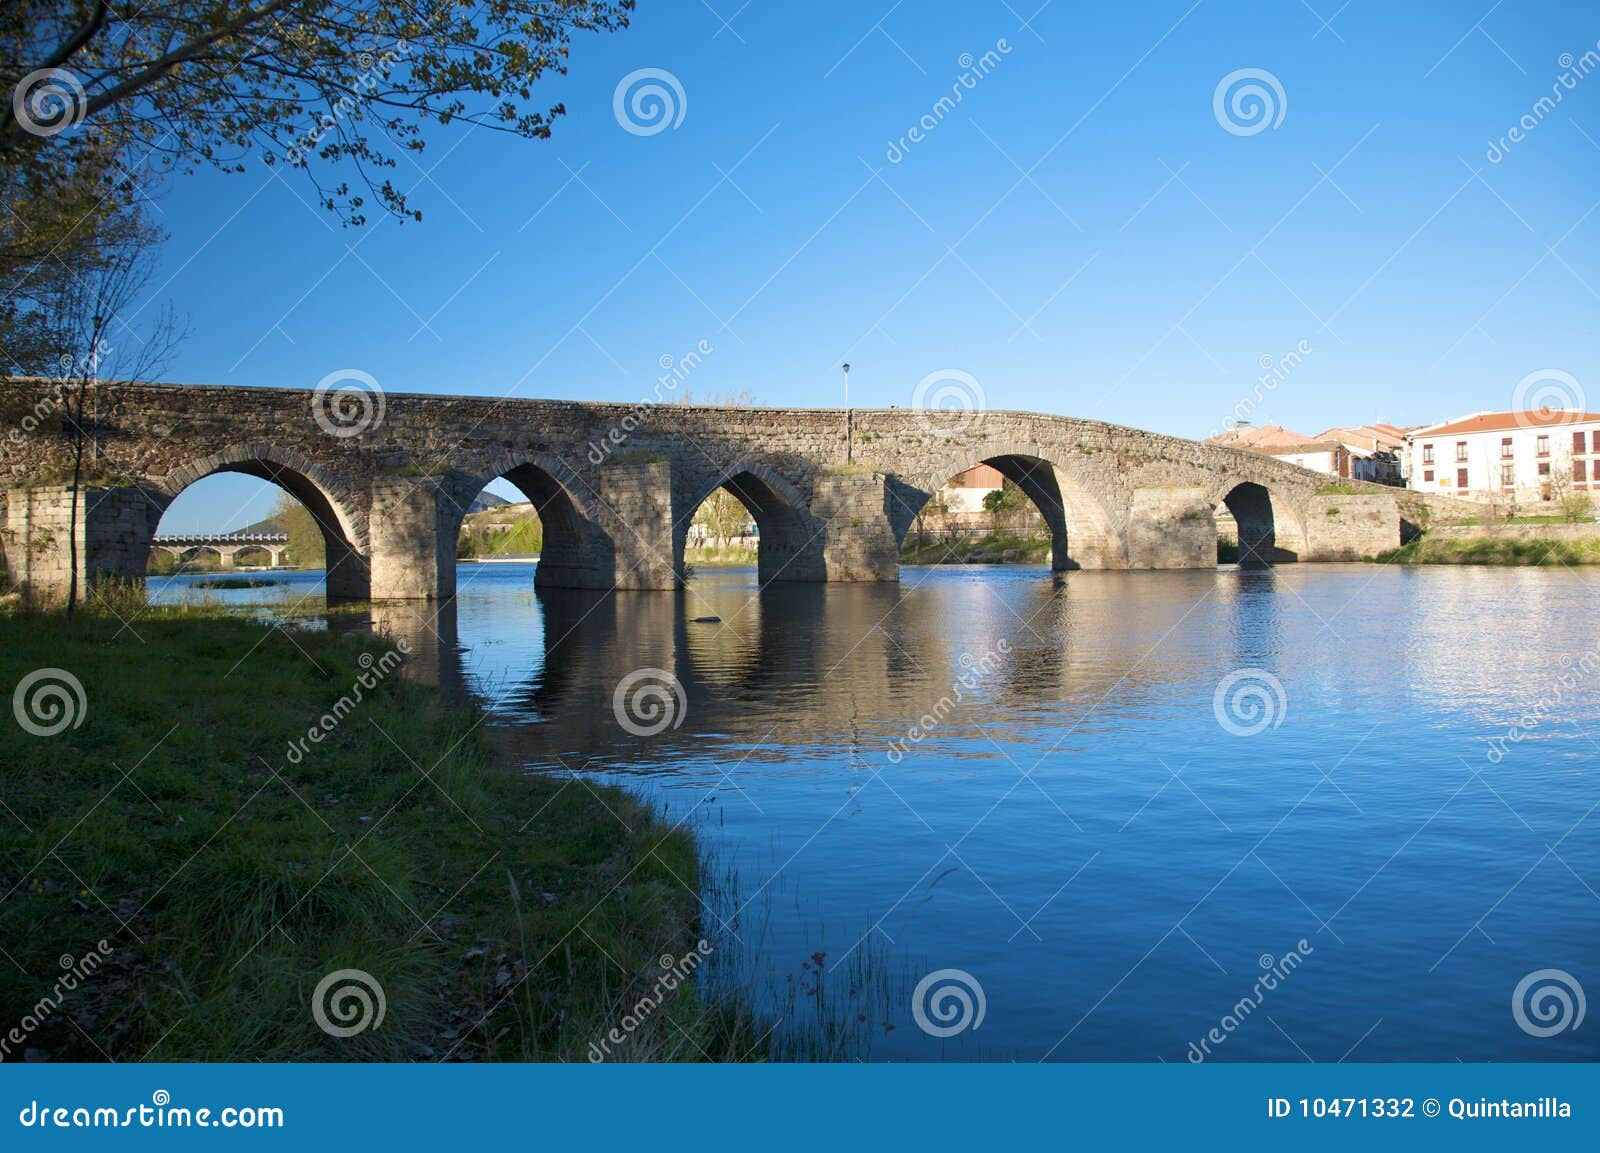 roman bridge at barco avila